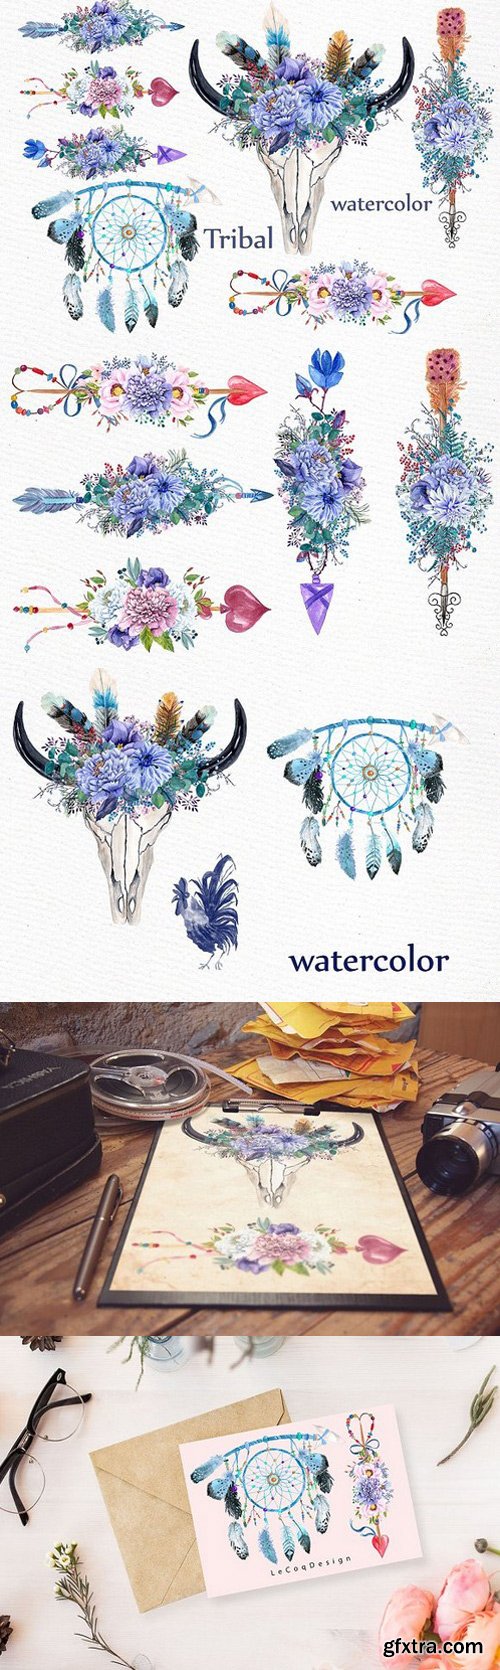 CM - Watercolor tribal clipart 1632604